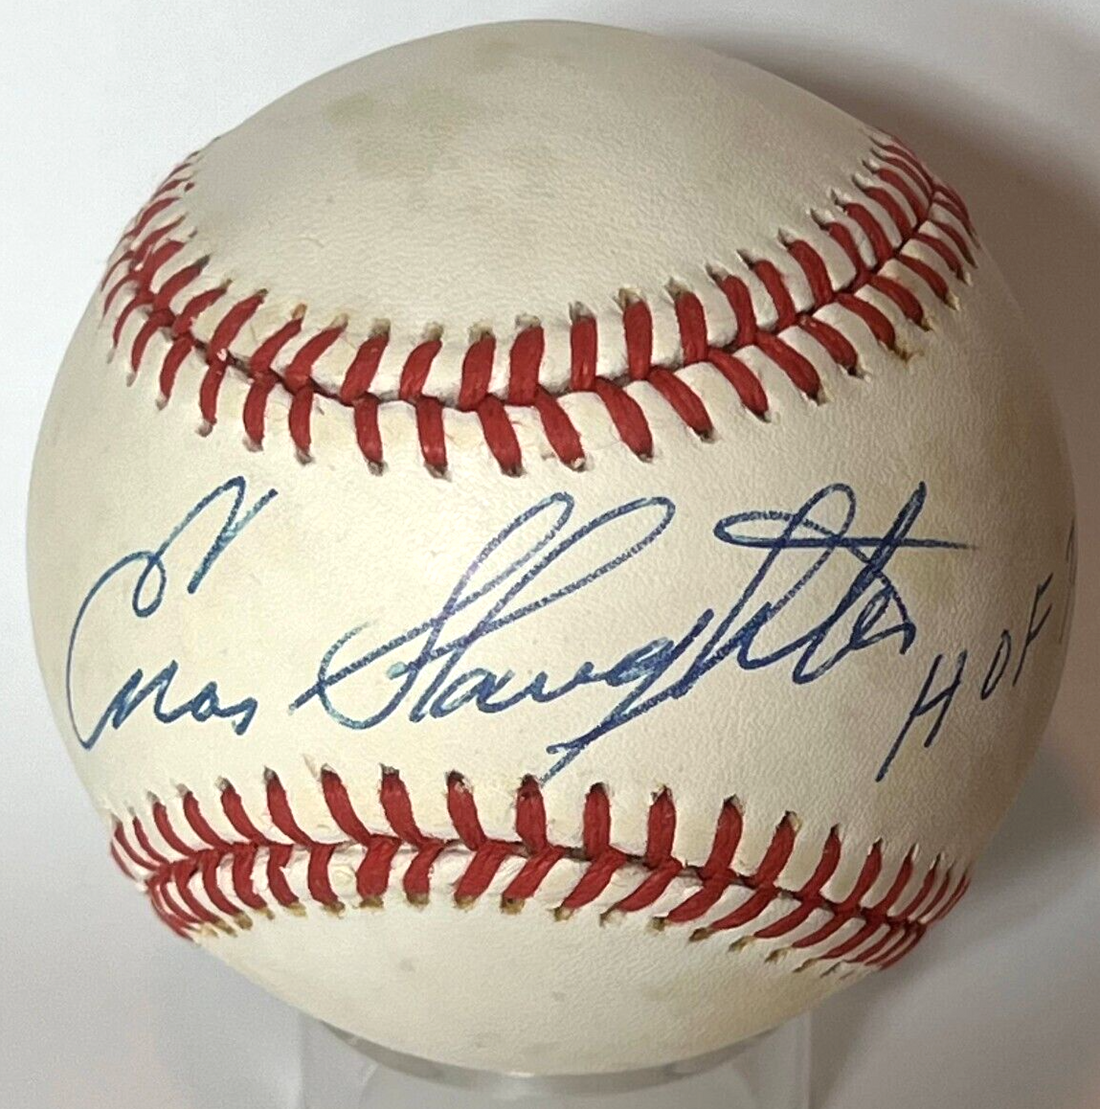 Enos Slaughter HOF Inscribed Signed Autograph Baseball. Cardinals JSA signature